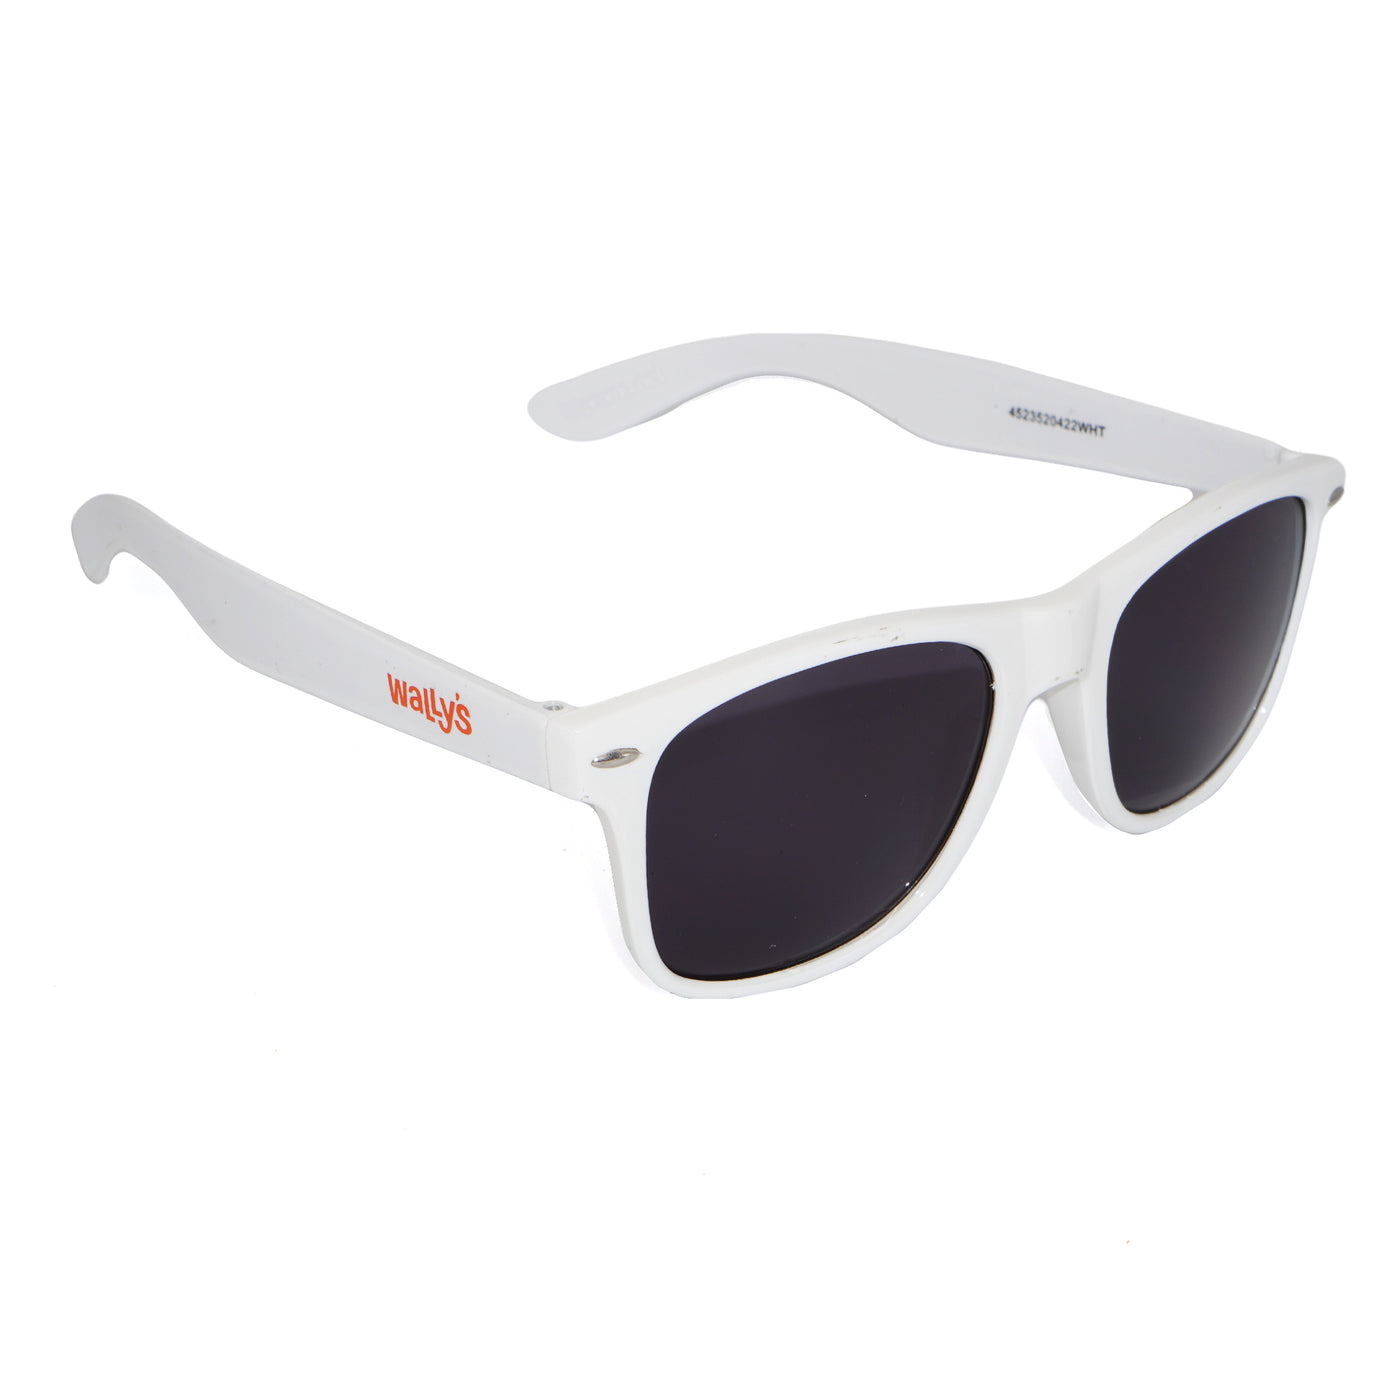 Wally's White Sunglasses